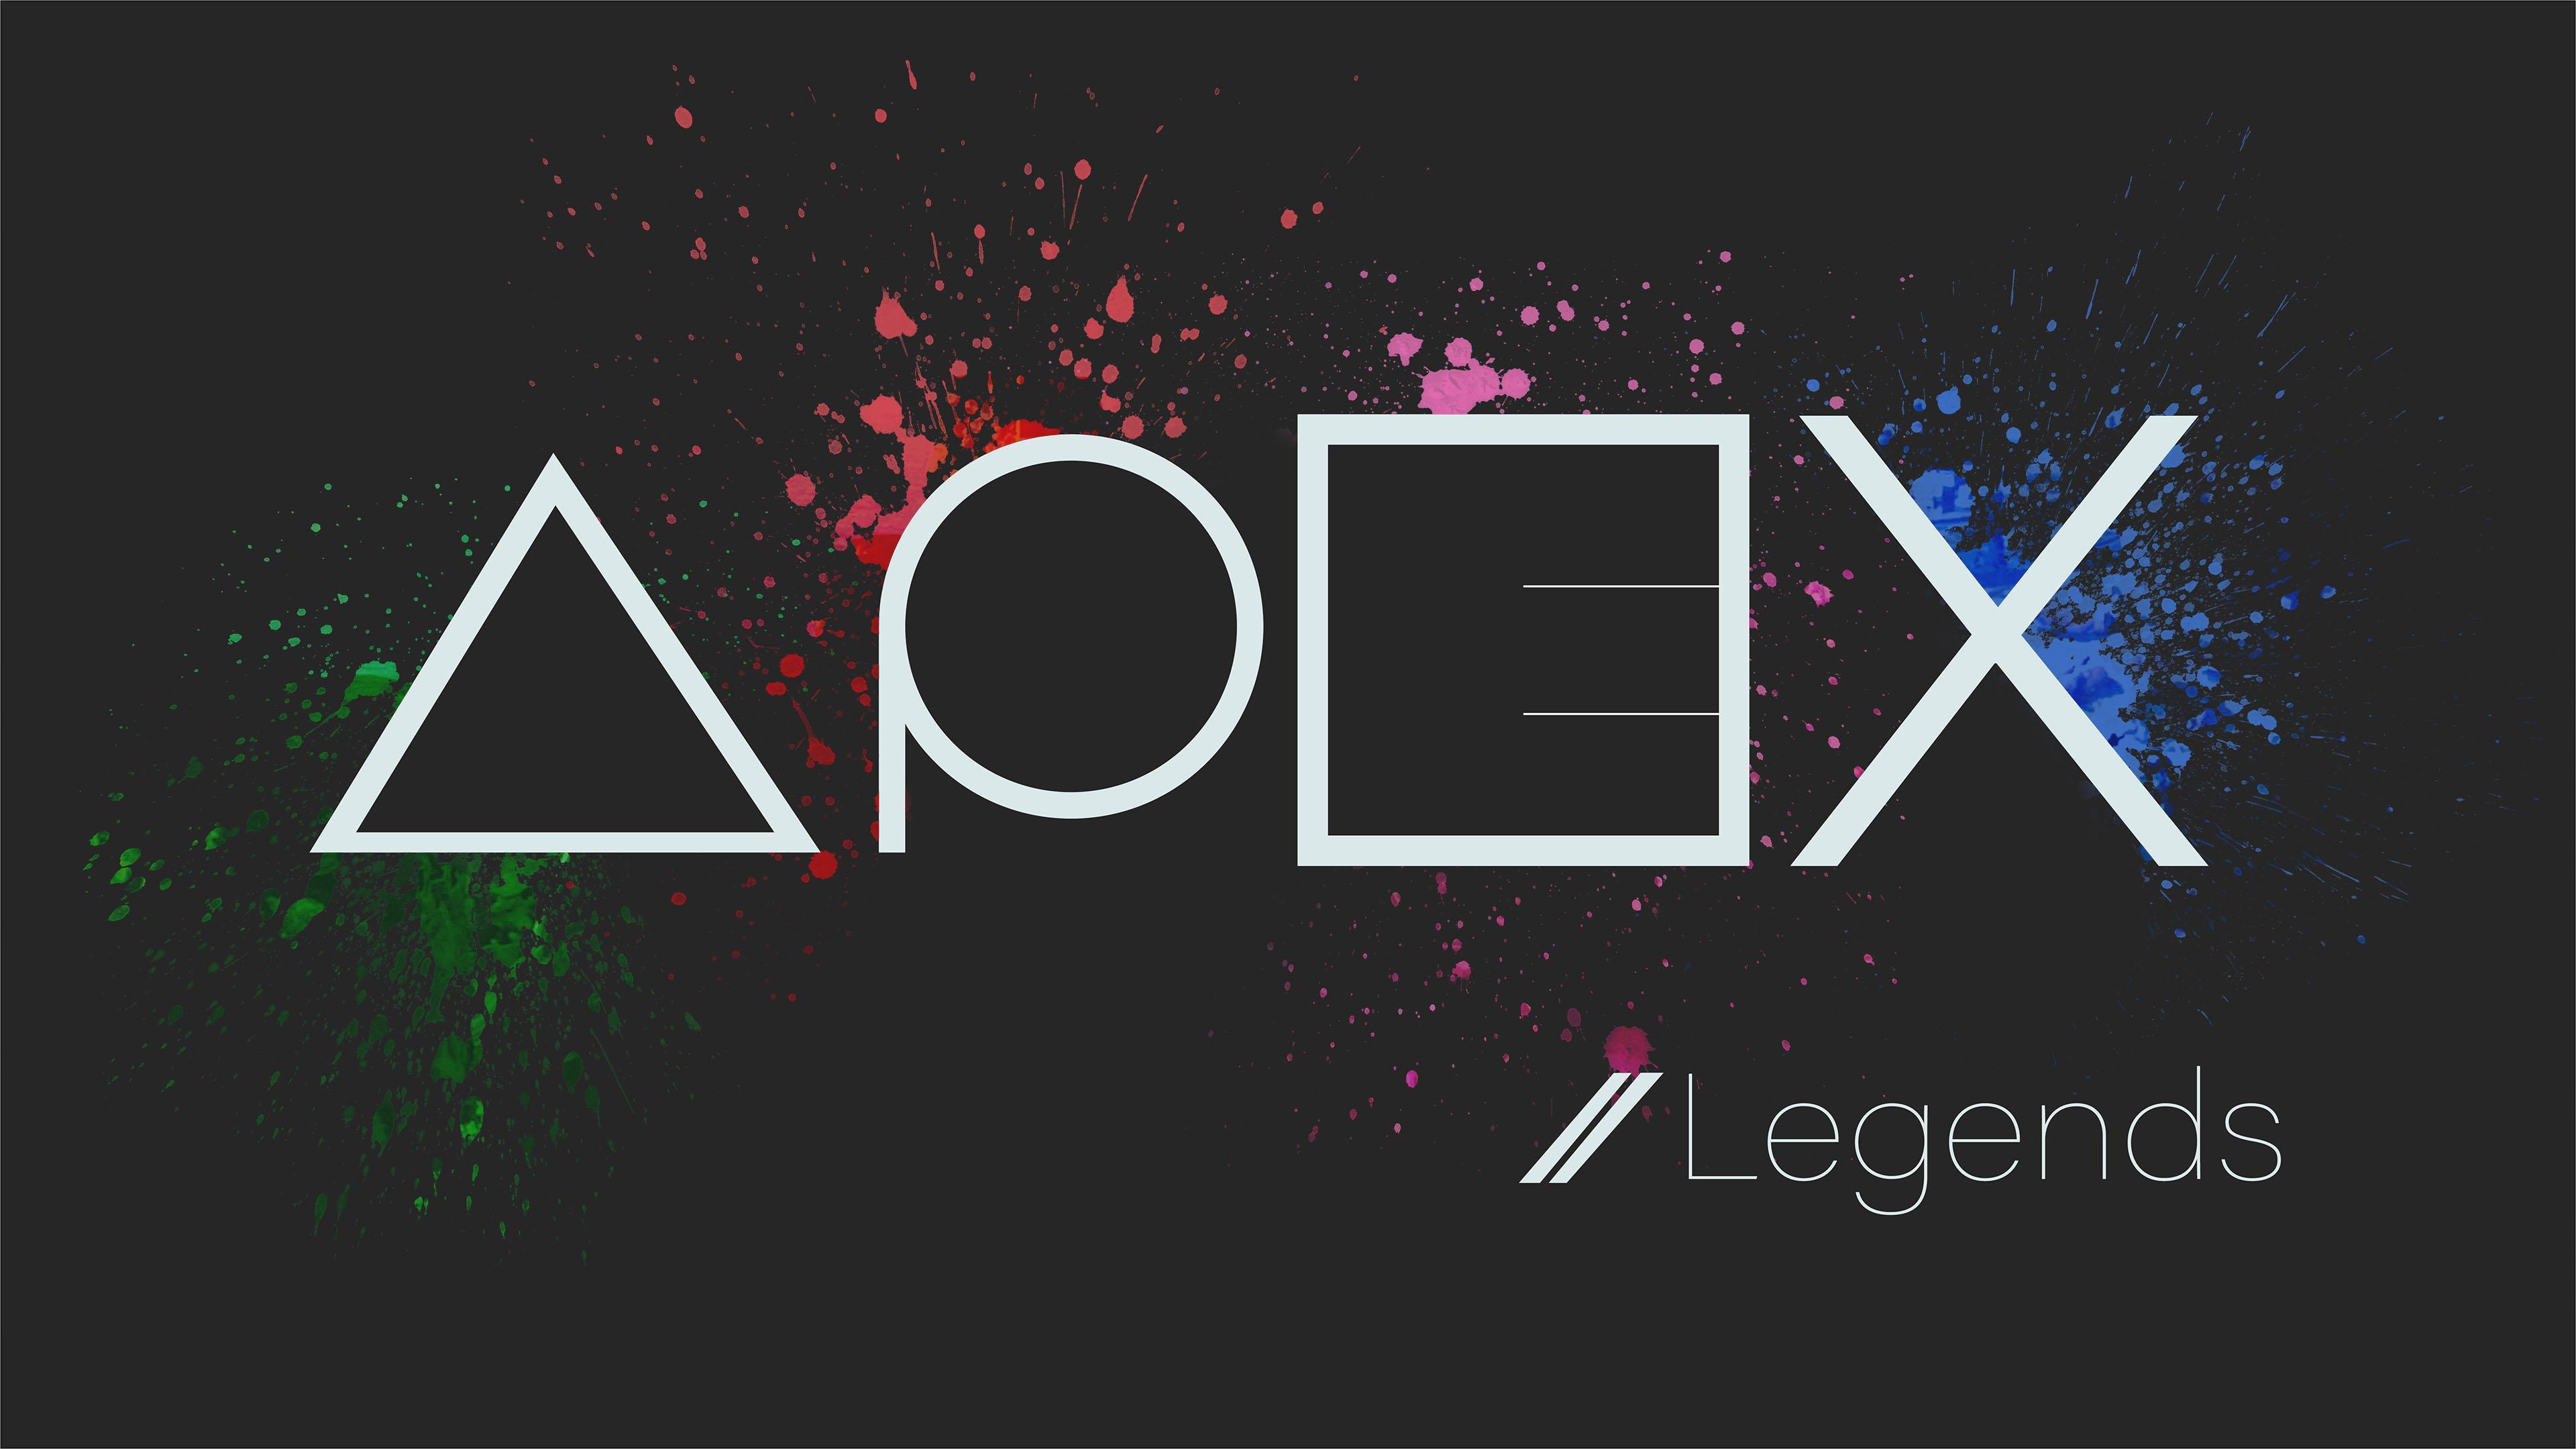 Apex Legends Logo Wallpapers Top Free Apex Legends Logo Backgrounds Wallpaperaccess